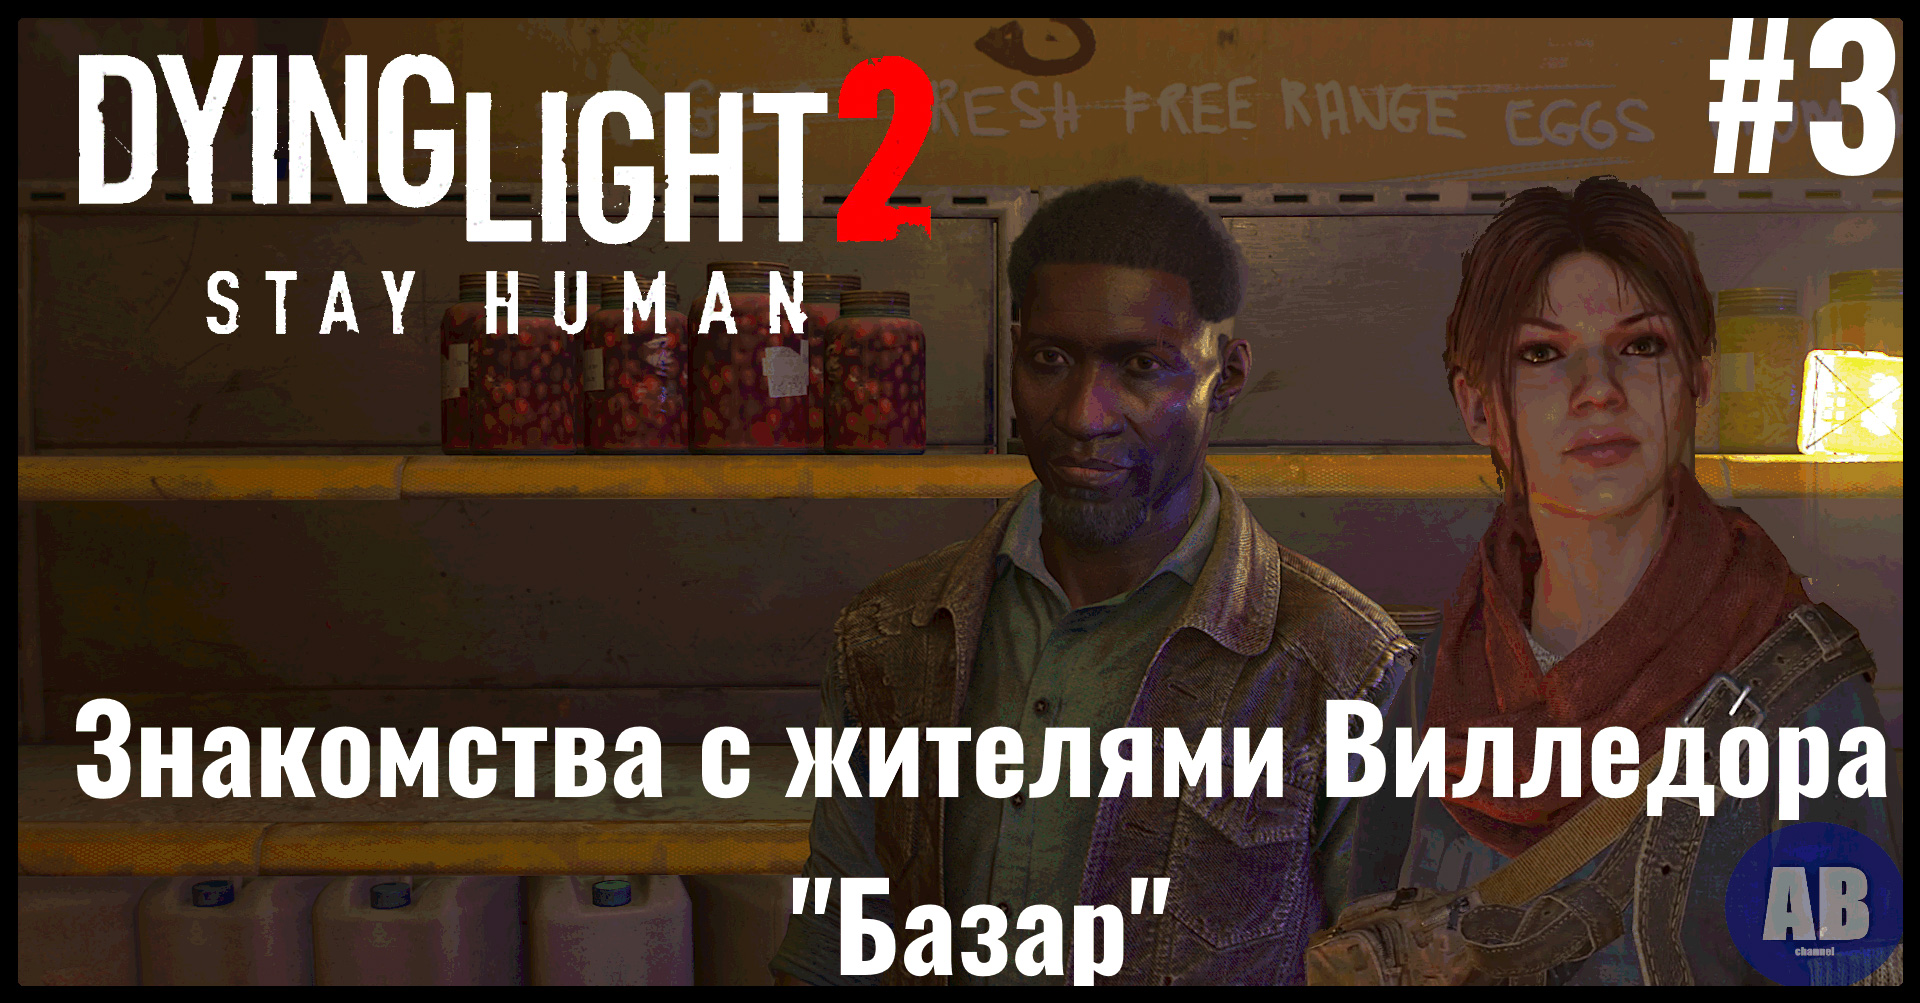 Stay human 2 прохождение. Dying Light 2: stay Human база ВГМ. Прохождение Dying Light 2: stay Human — часть 2.